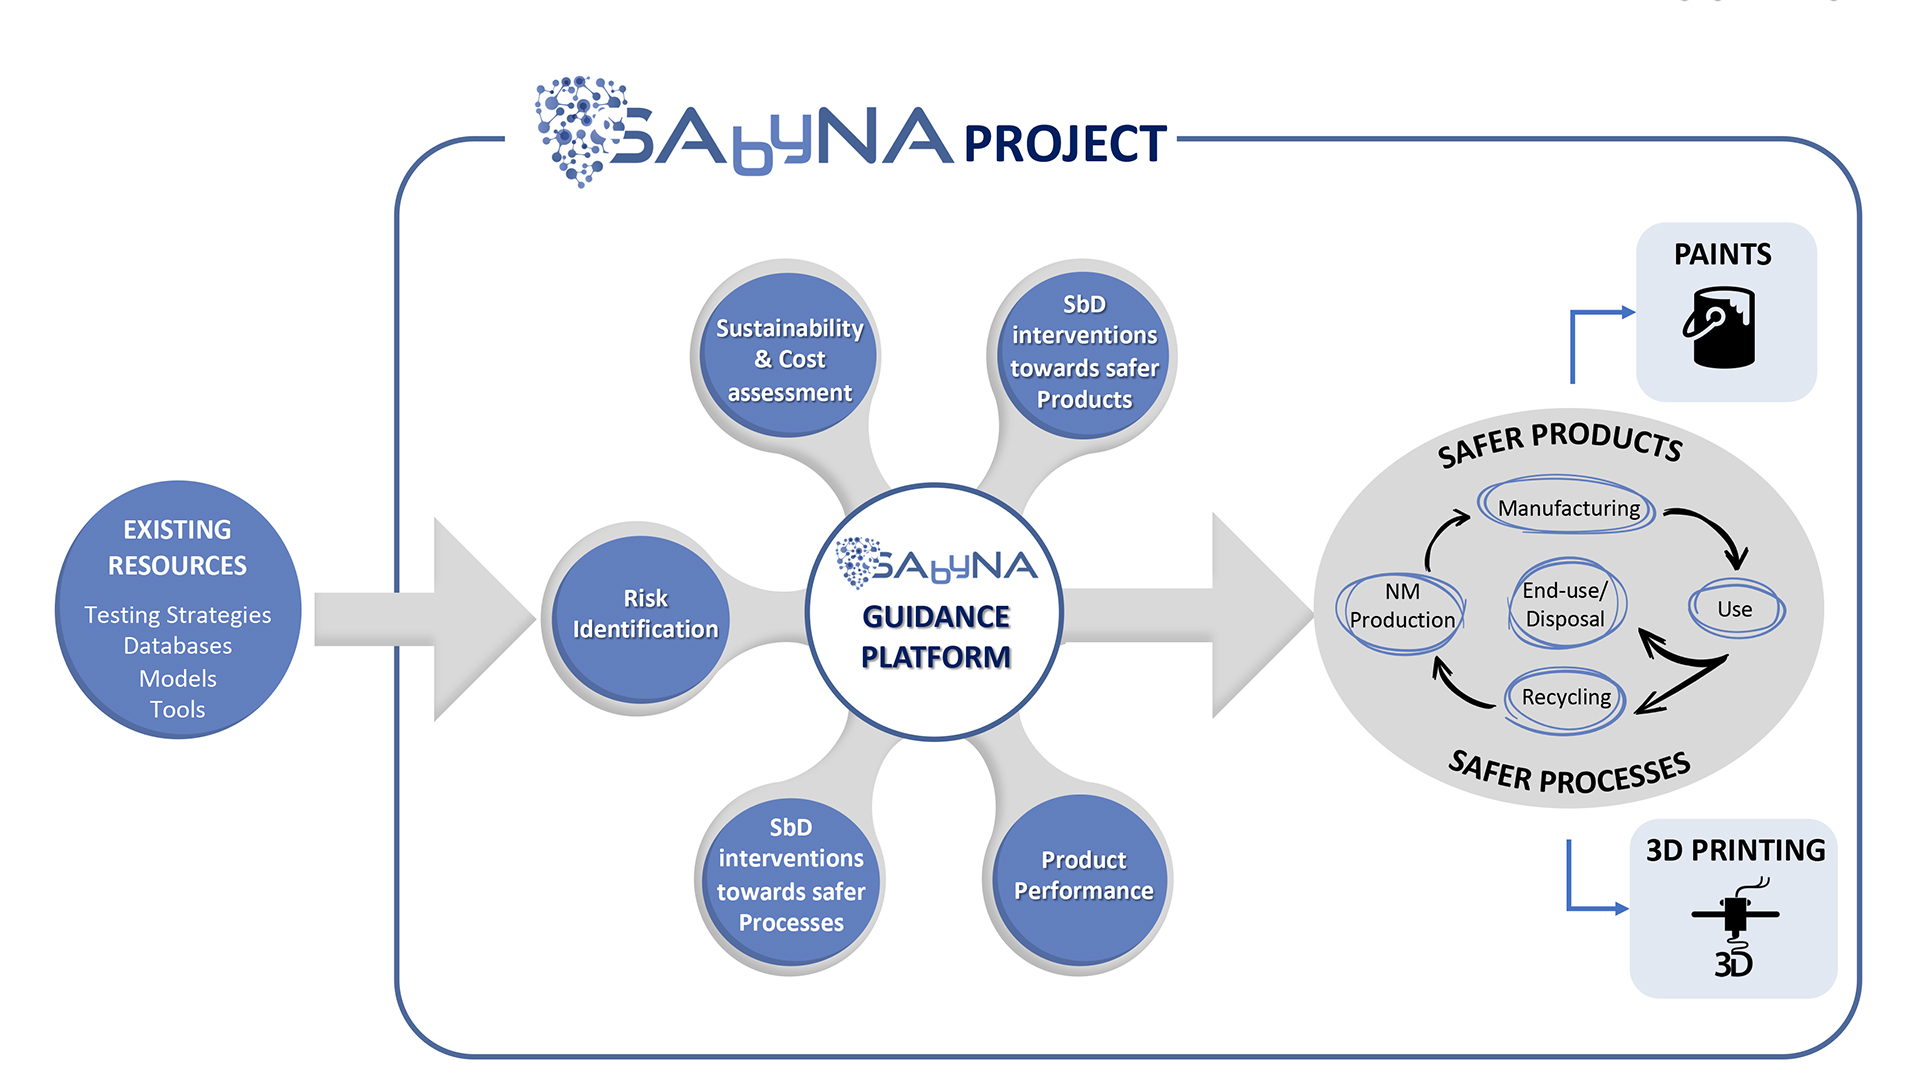 SAbyNA Guidance Platform